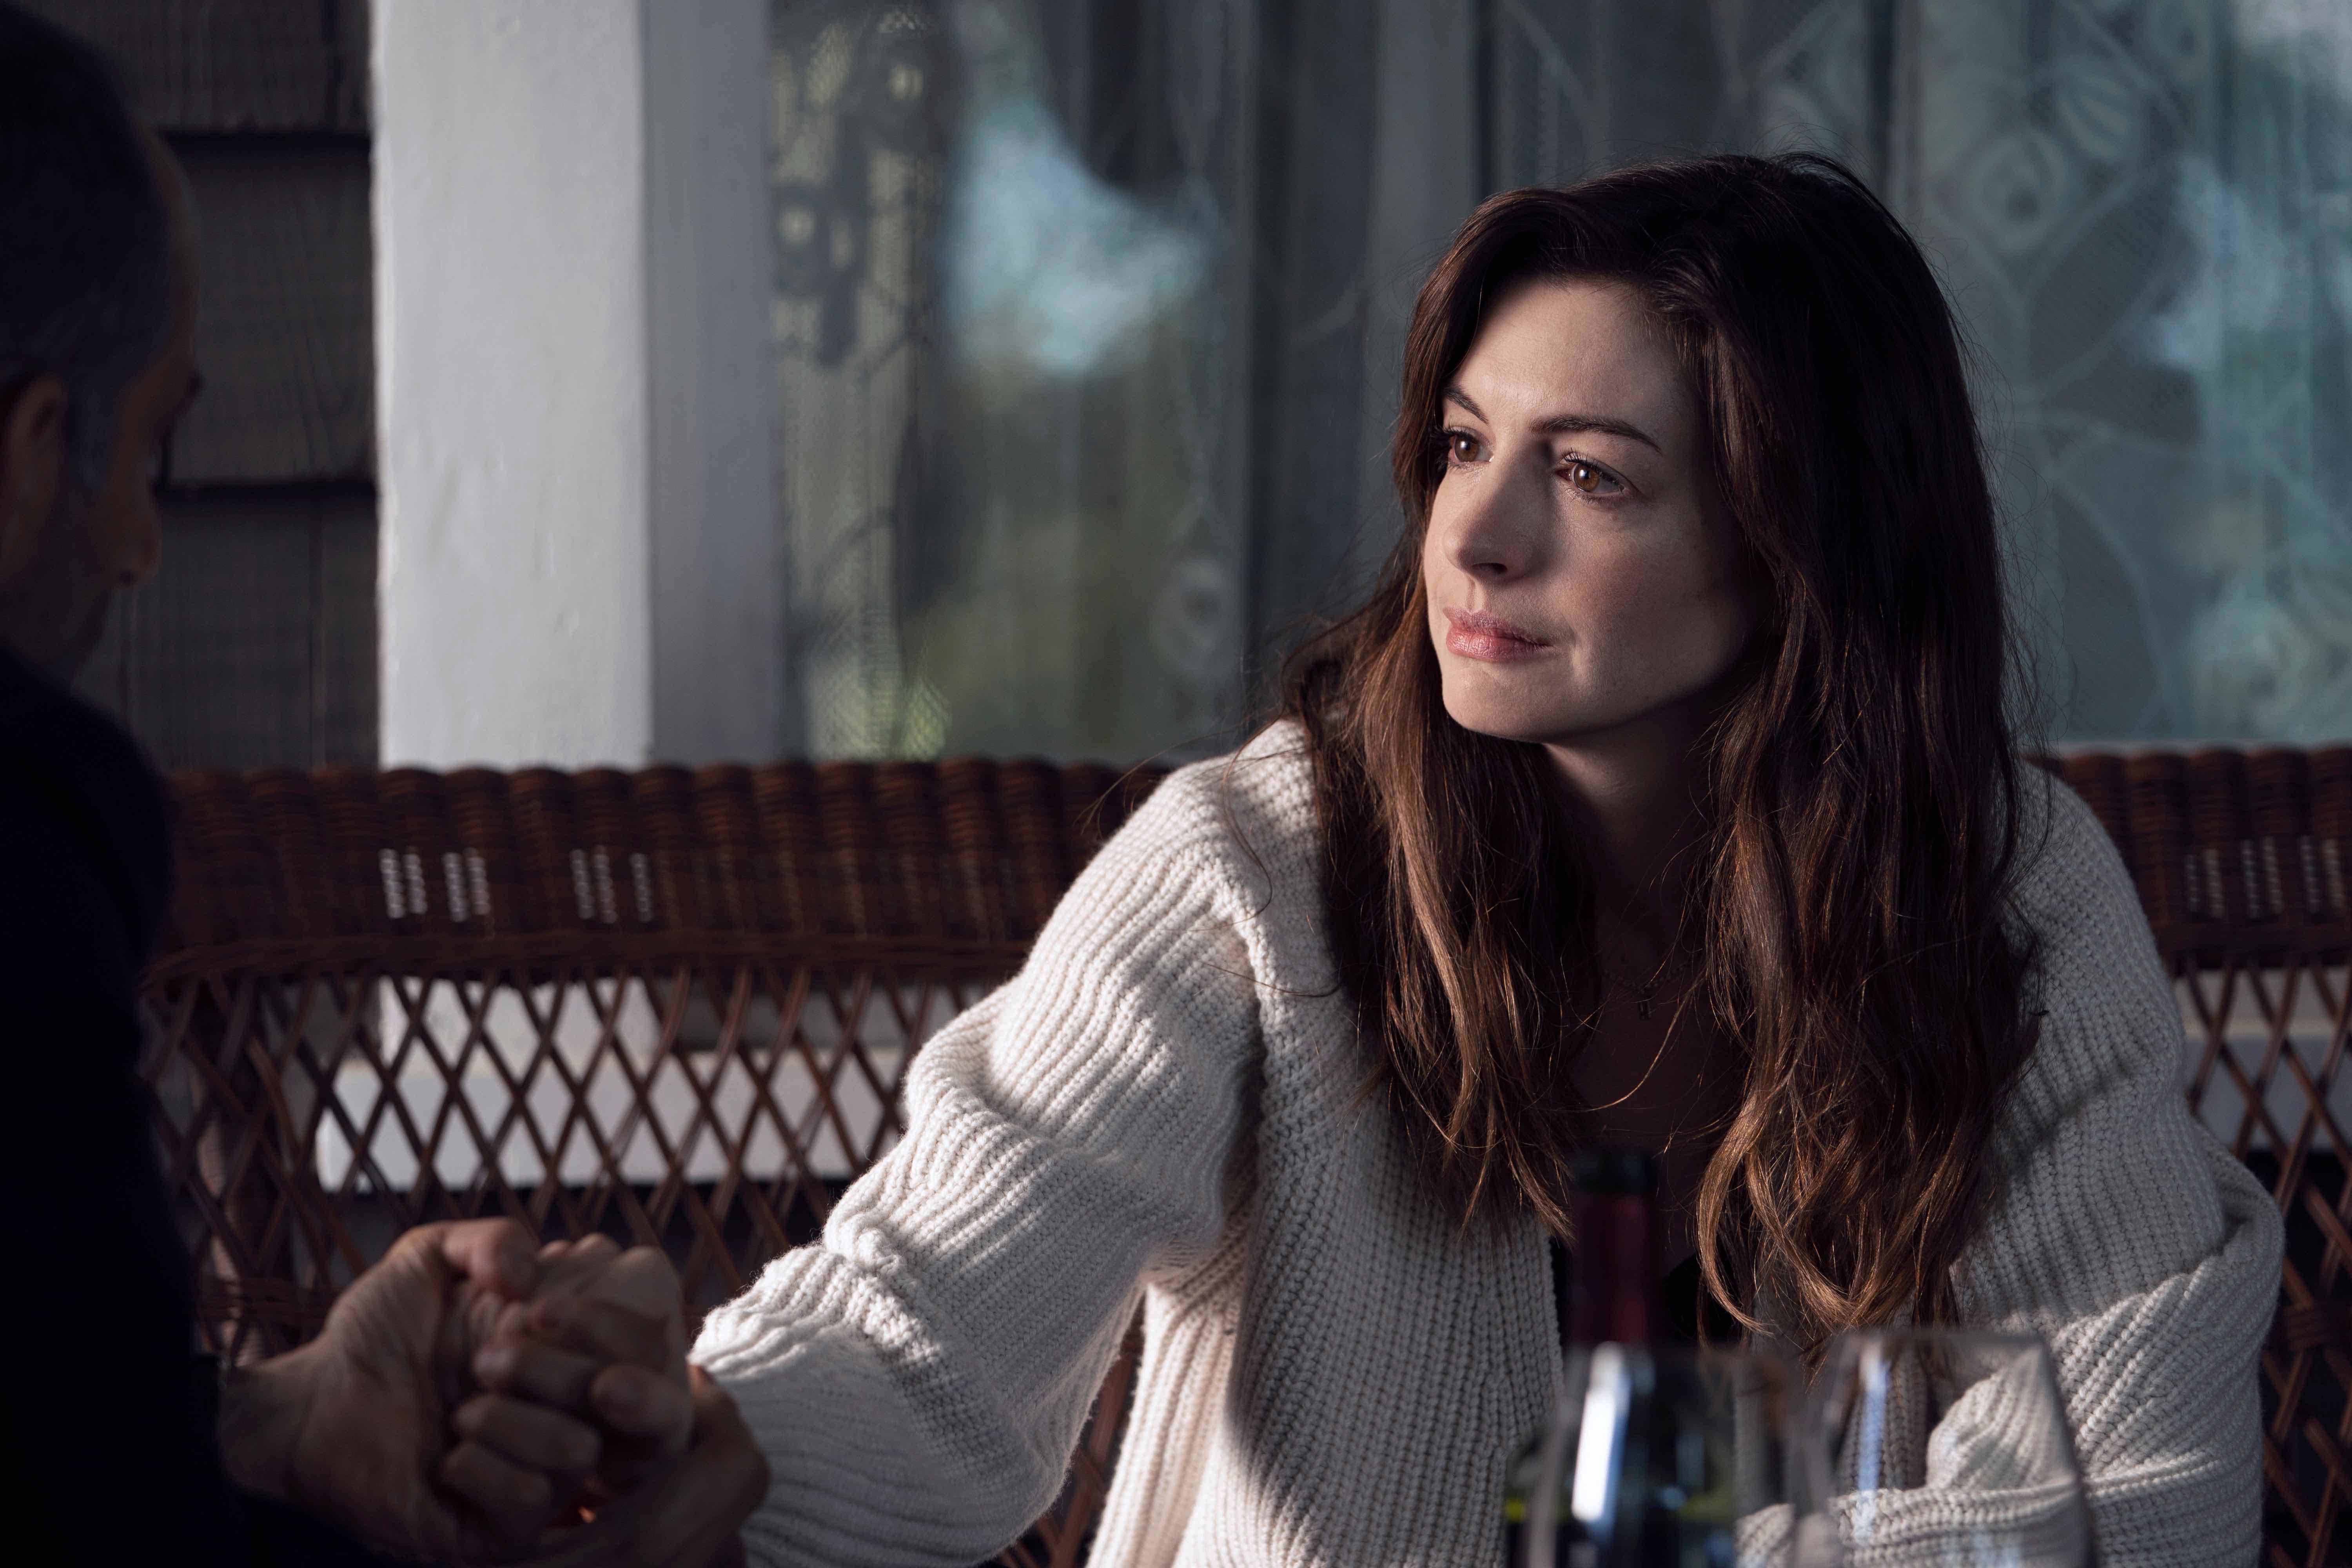 WeCrashed Cast on Apple TV+ - Anne Hathaway as Rebekah Neumann